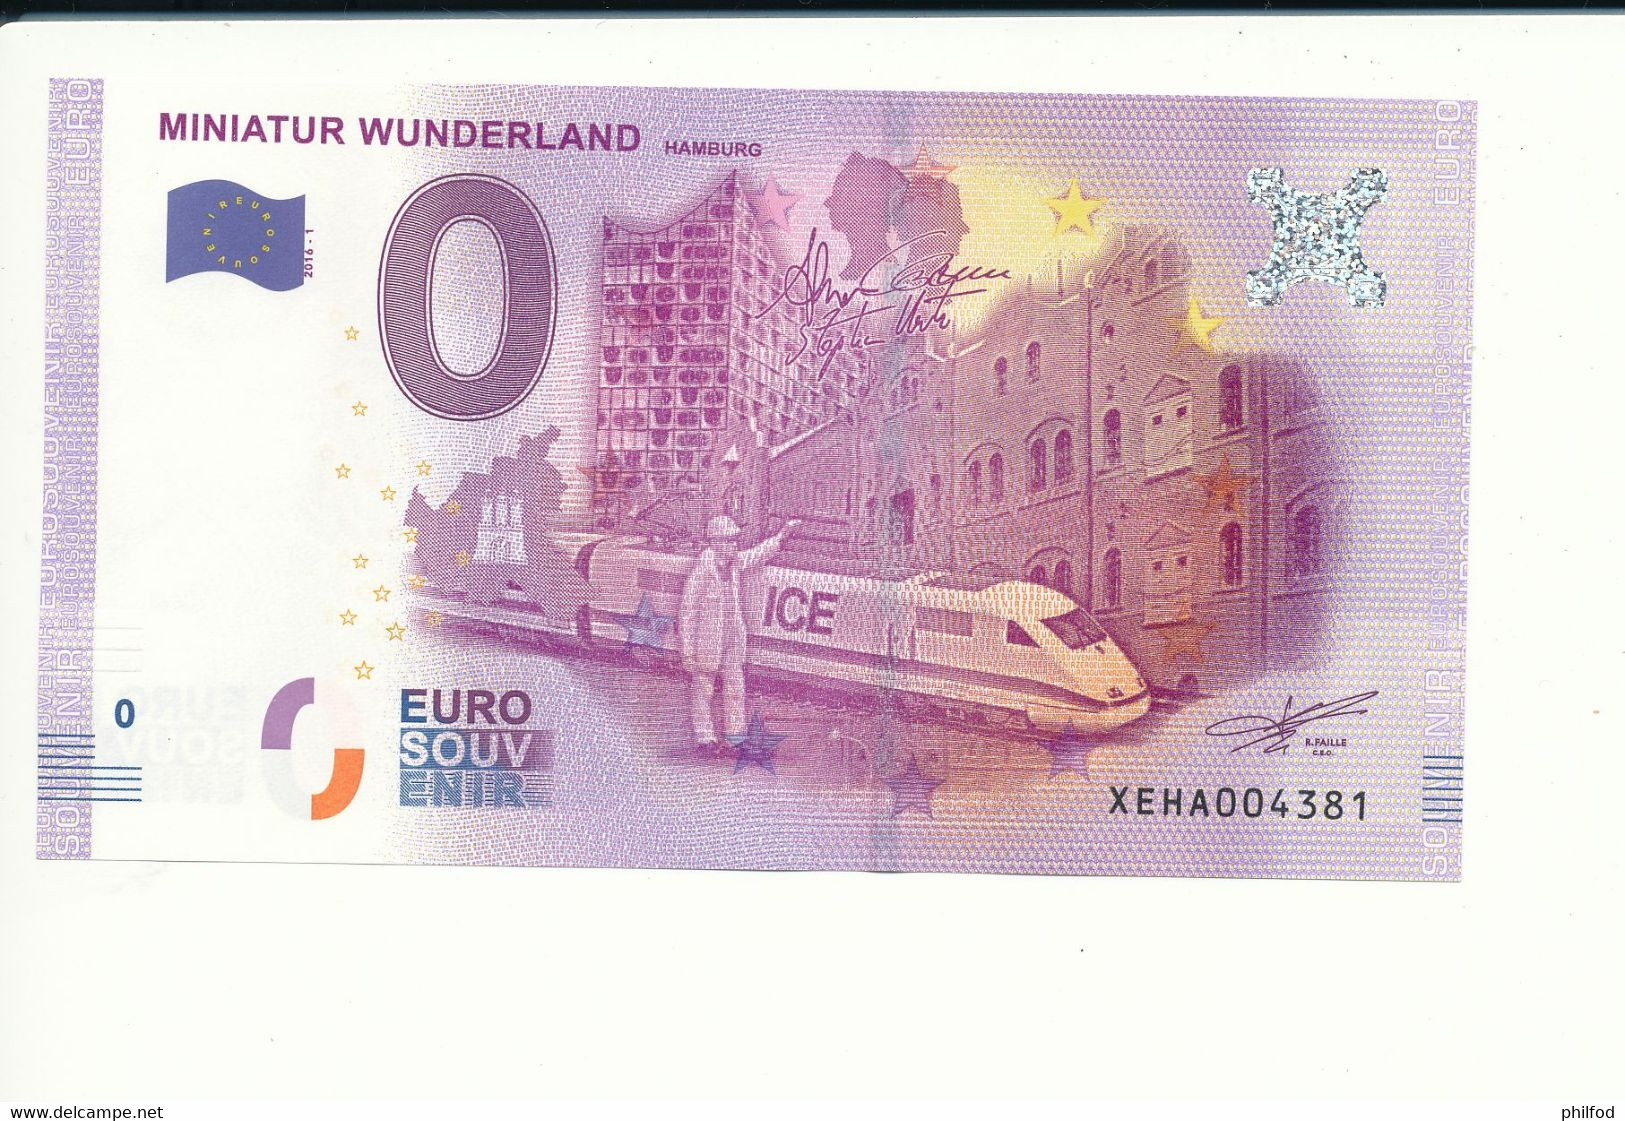 Billet Souvenir - 0 Euro - XEHA - 2016- 1 - MINIATUR WUNDERLAND HAMBURG - N° 4381 - Billet épuisé - Vrac - Billets